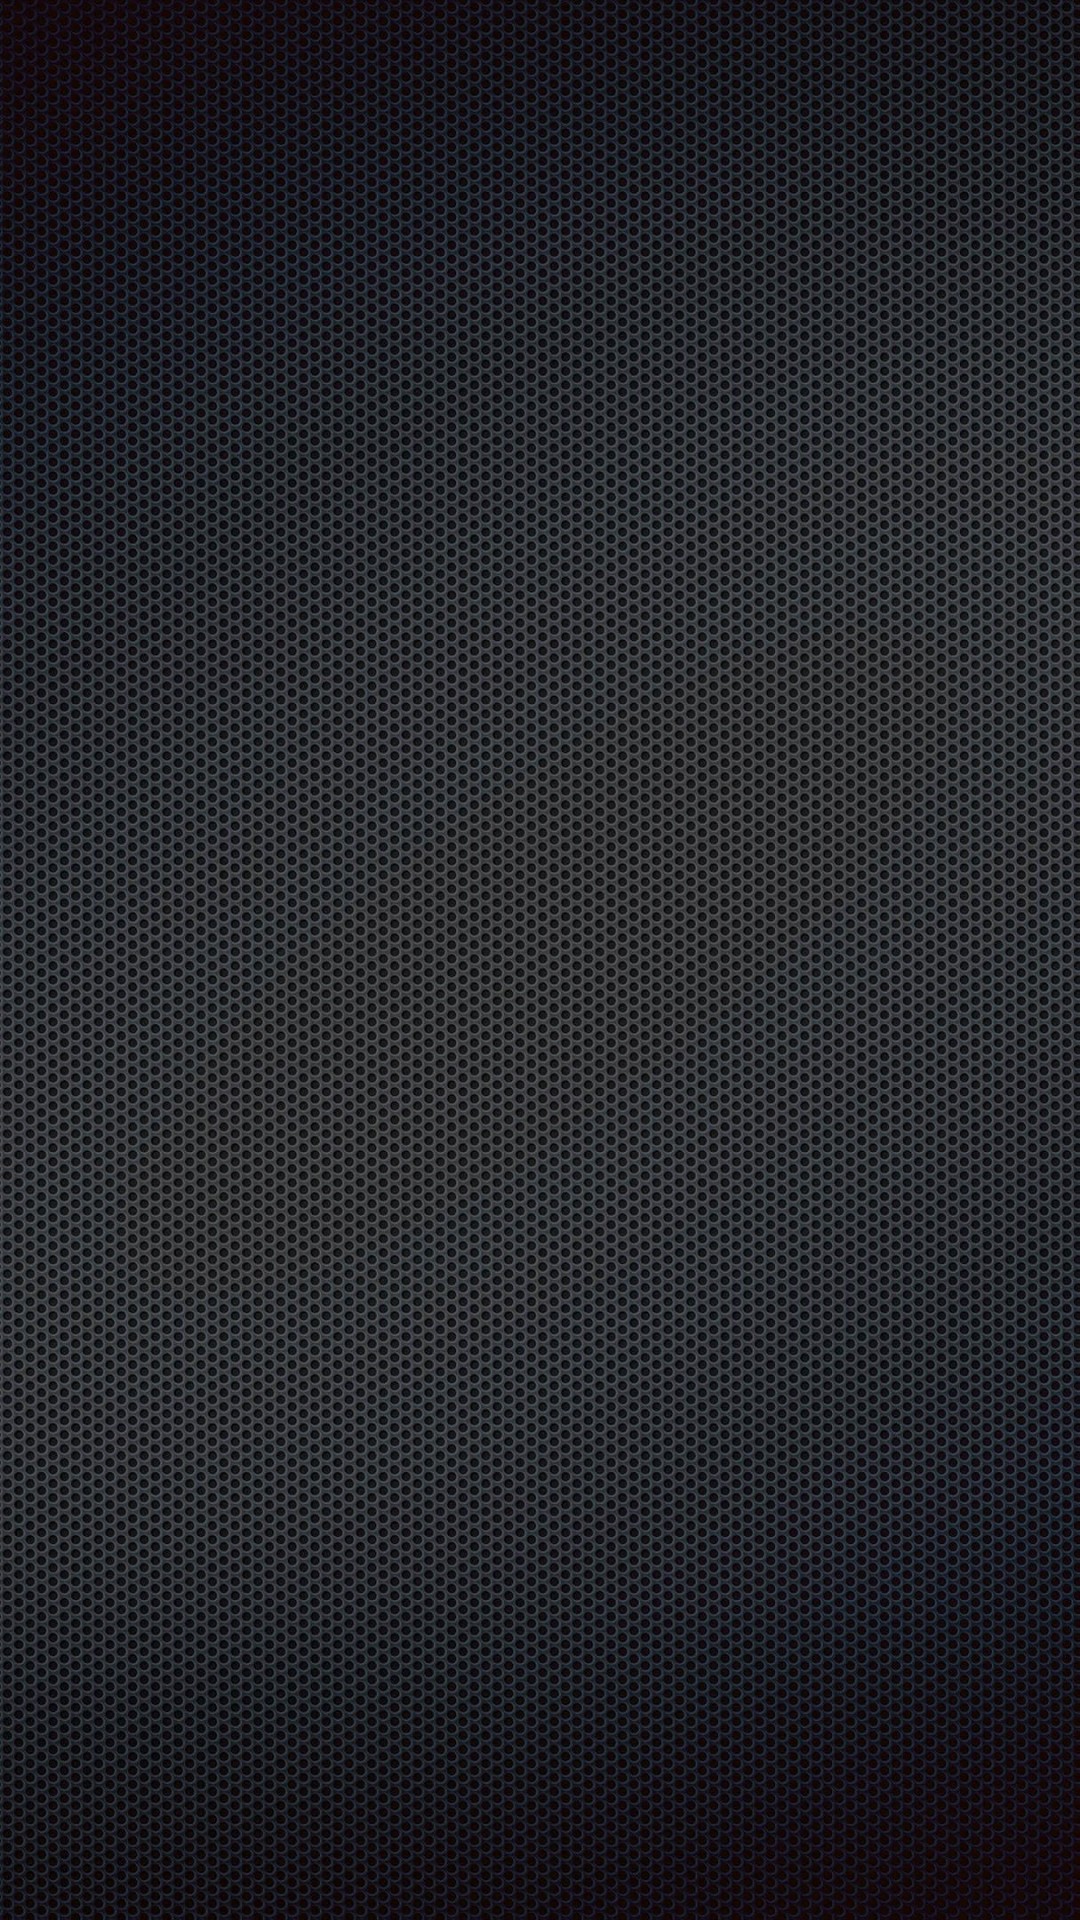 Black Grill Texture Wallpaper for Motorola Moto X